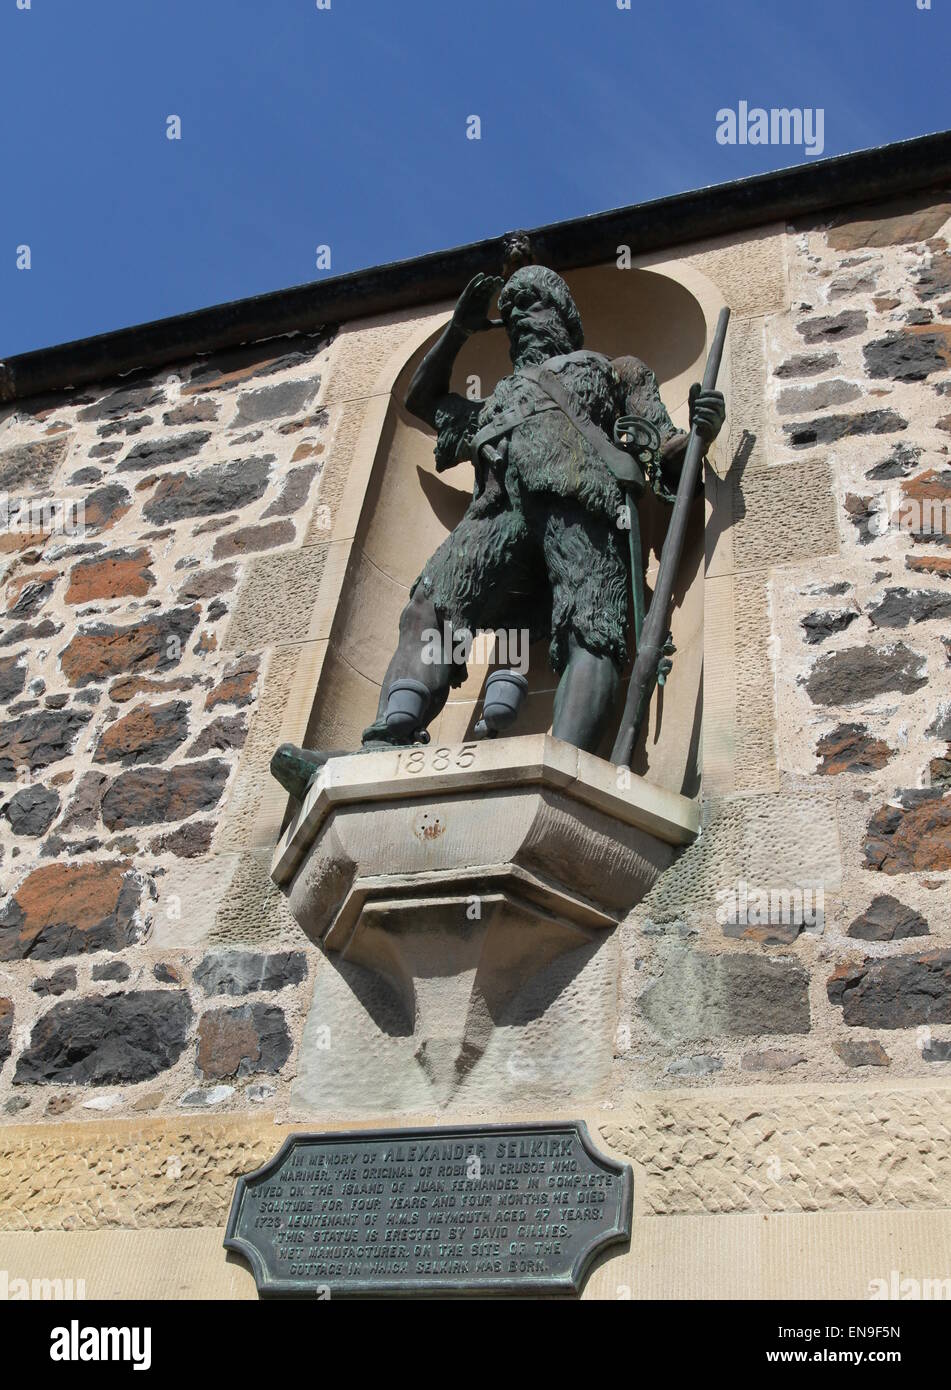 Dimensioni di vita statua in bronzo di Alexander Selkirk lower largo fife scozia aprile 2015 Foto Stock